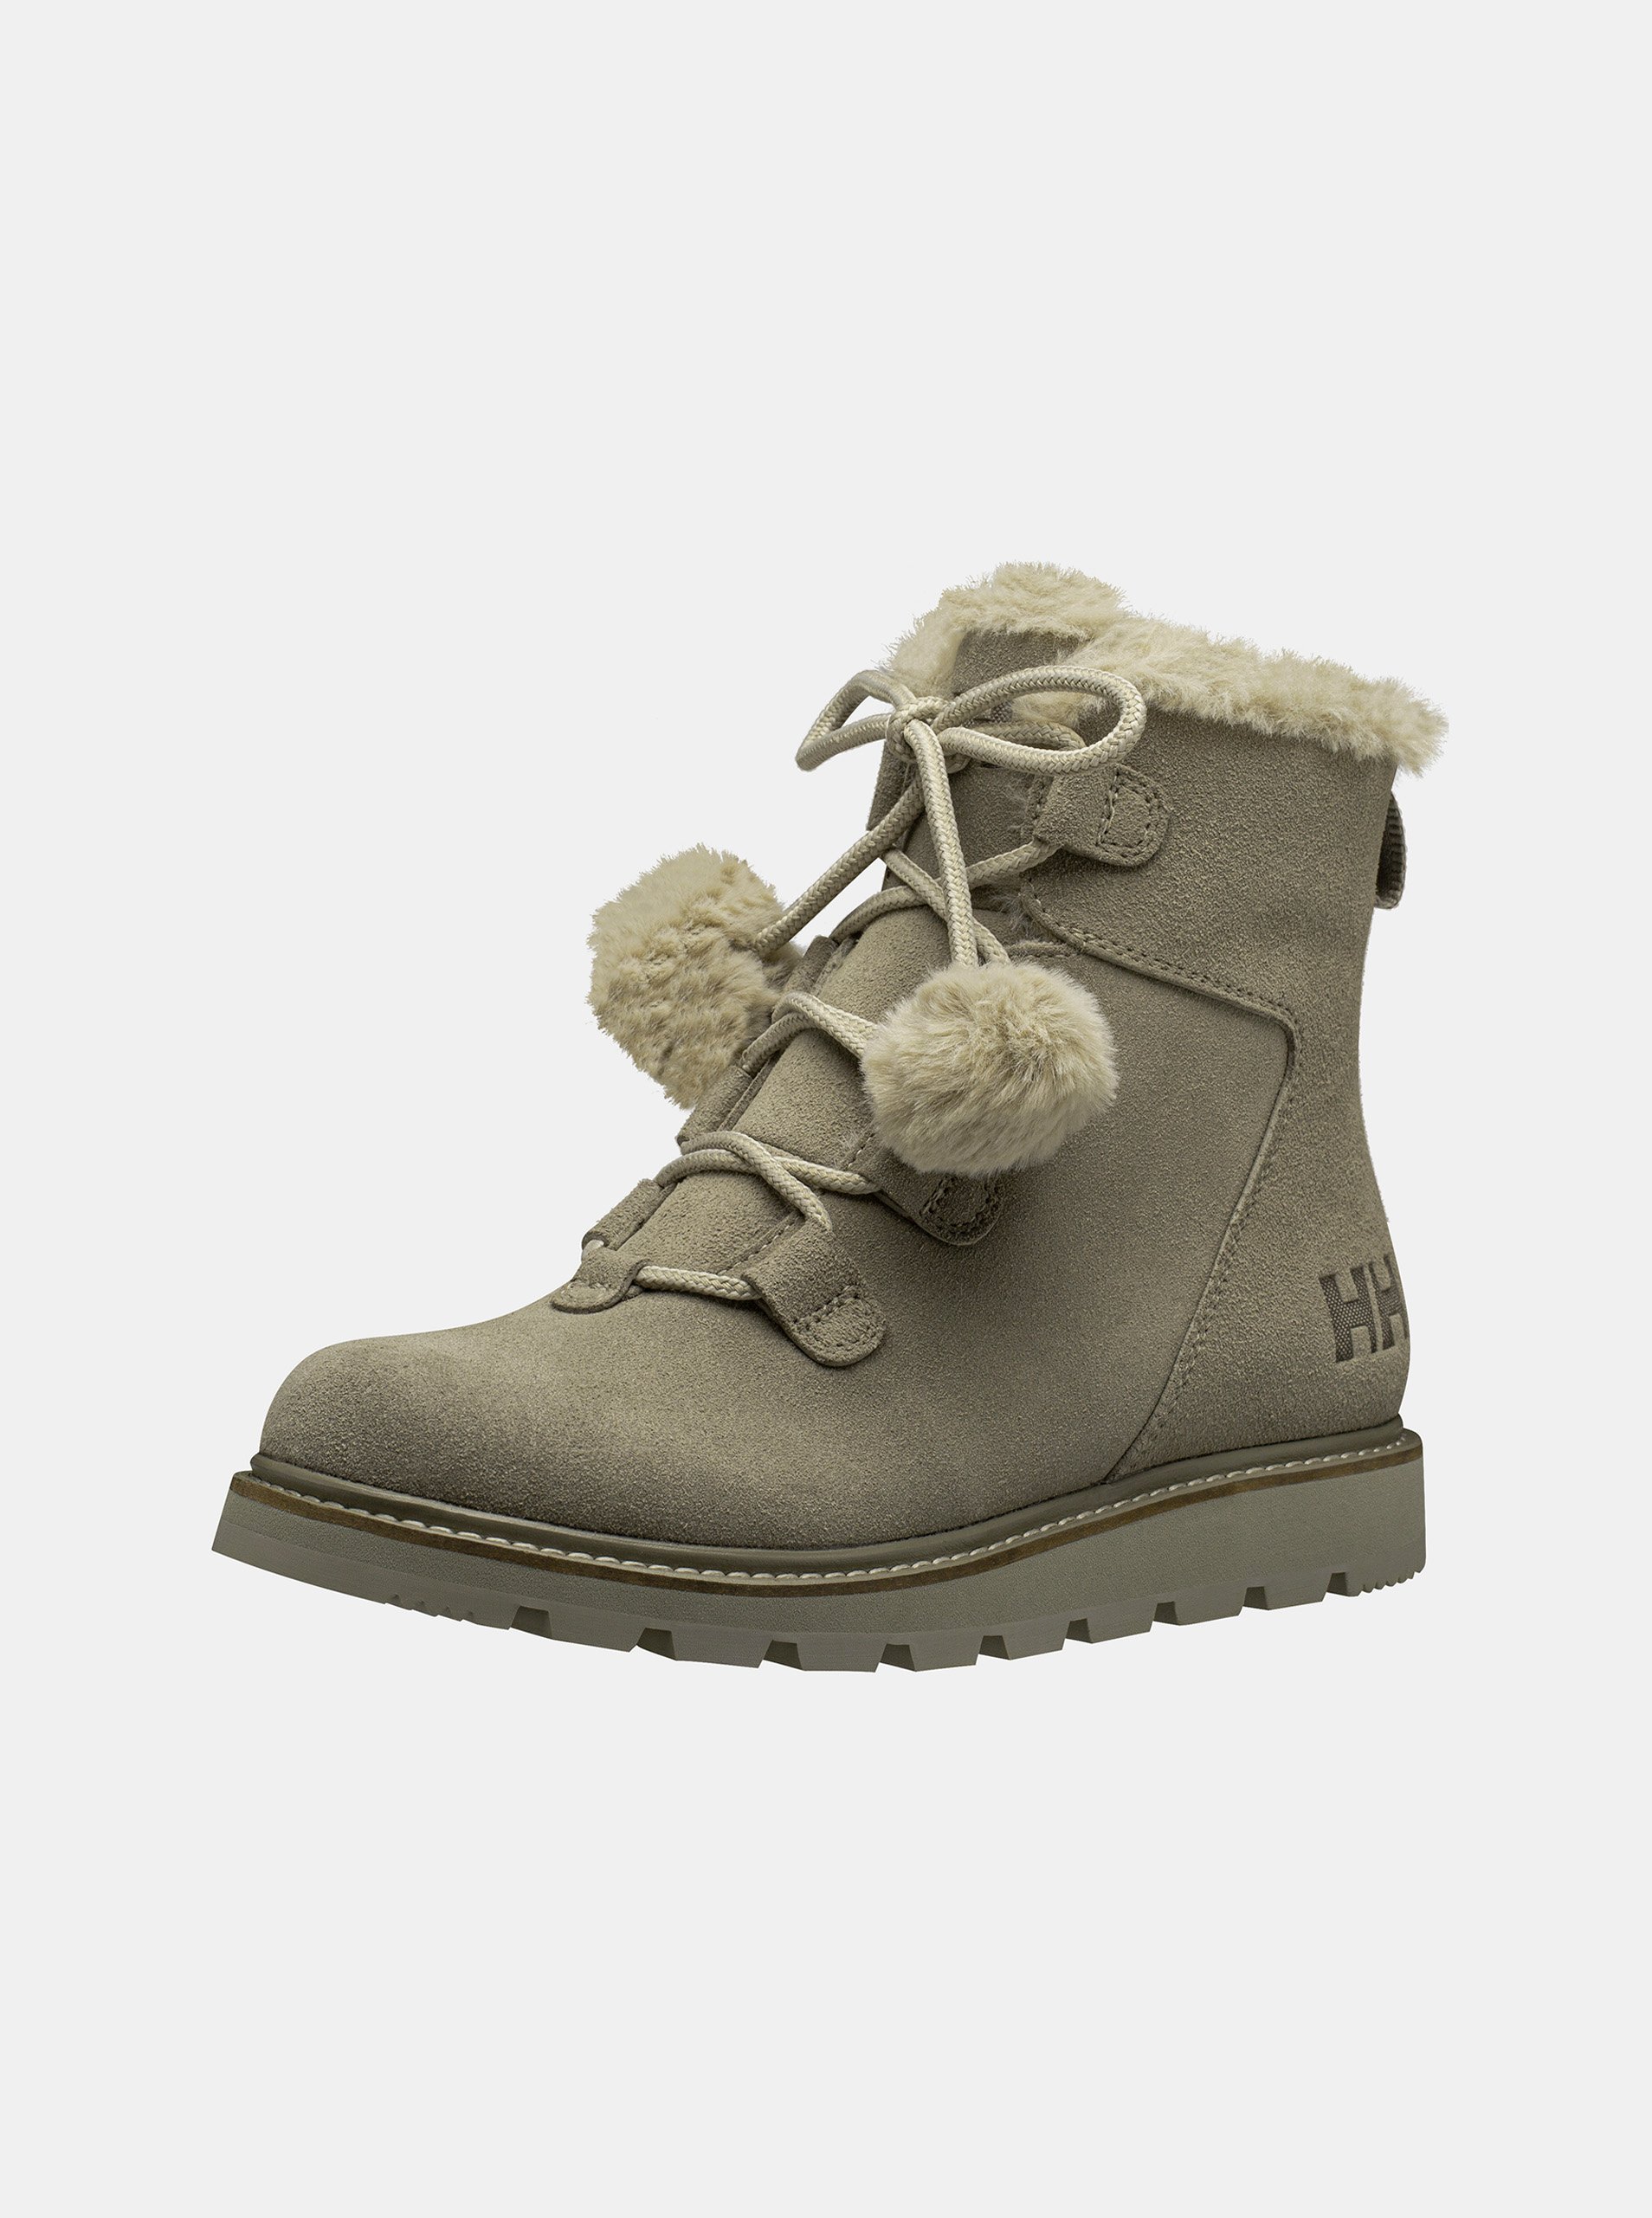 E-shop Kaki dámske kožené členkové zimné topánky HELLY HANSEN